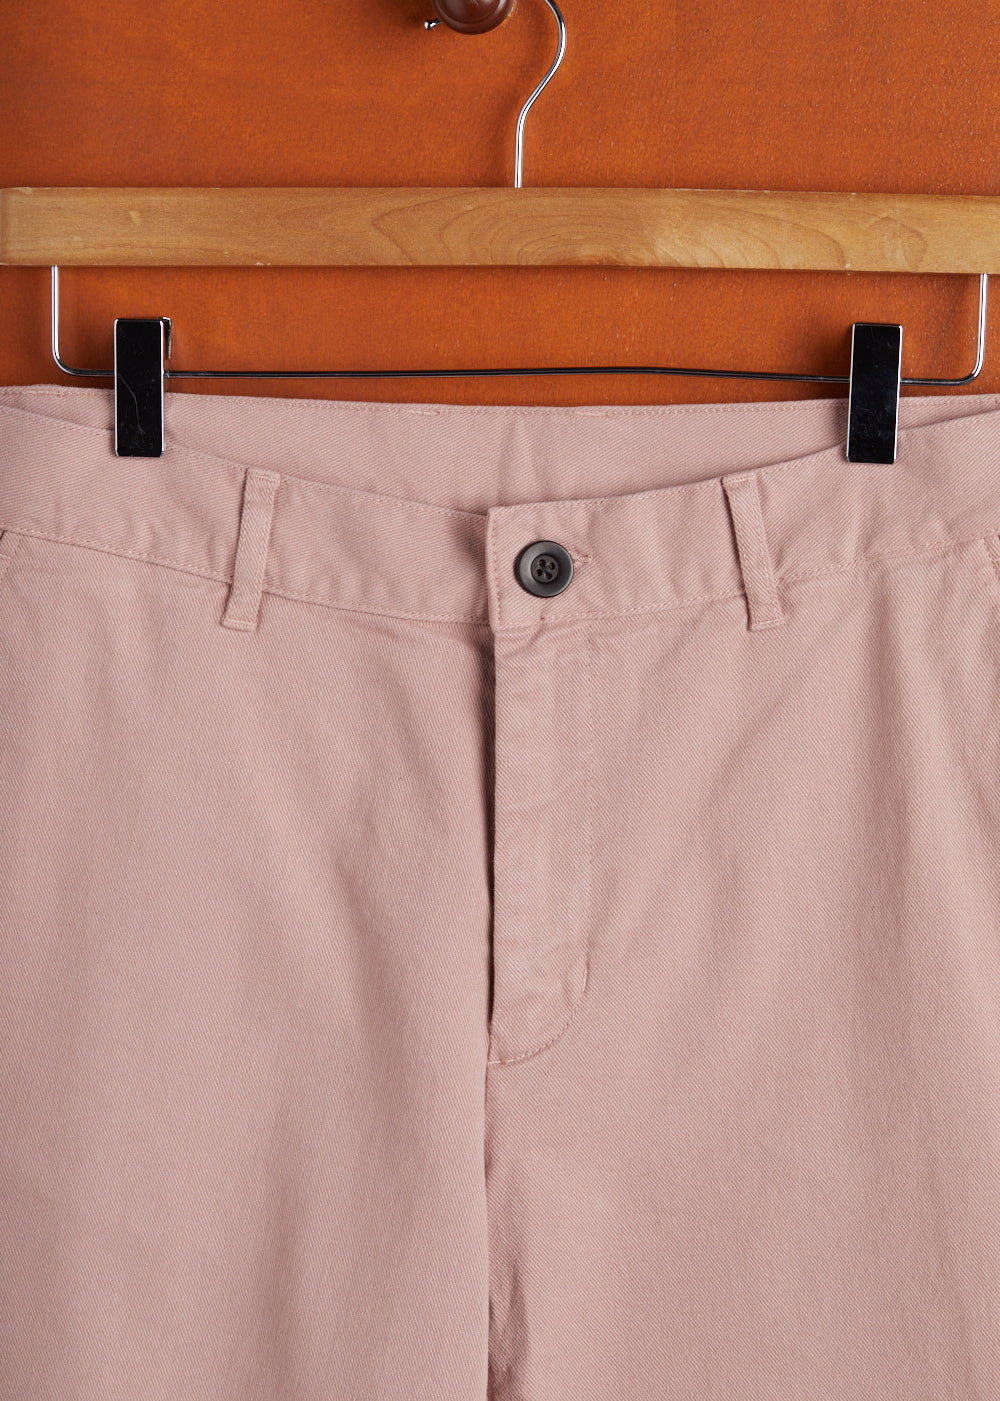 Twill Trousers - Rose Pink - Portuguese Flannel - Danali